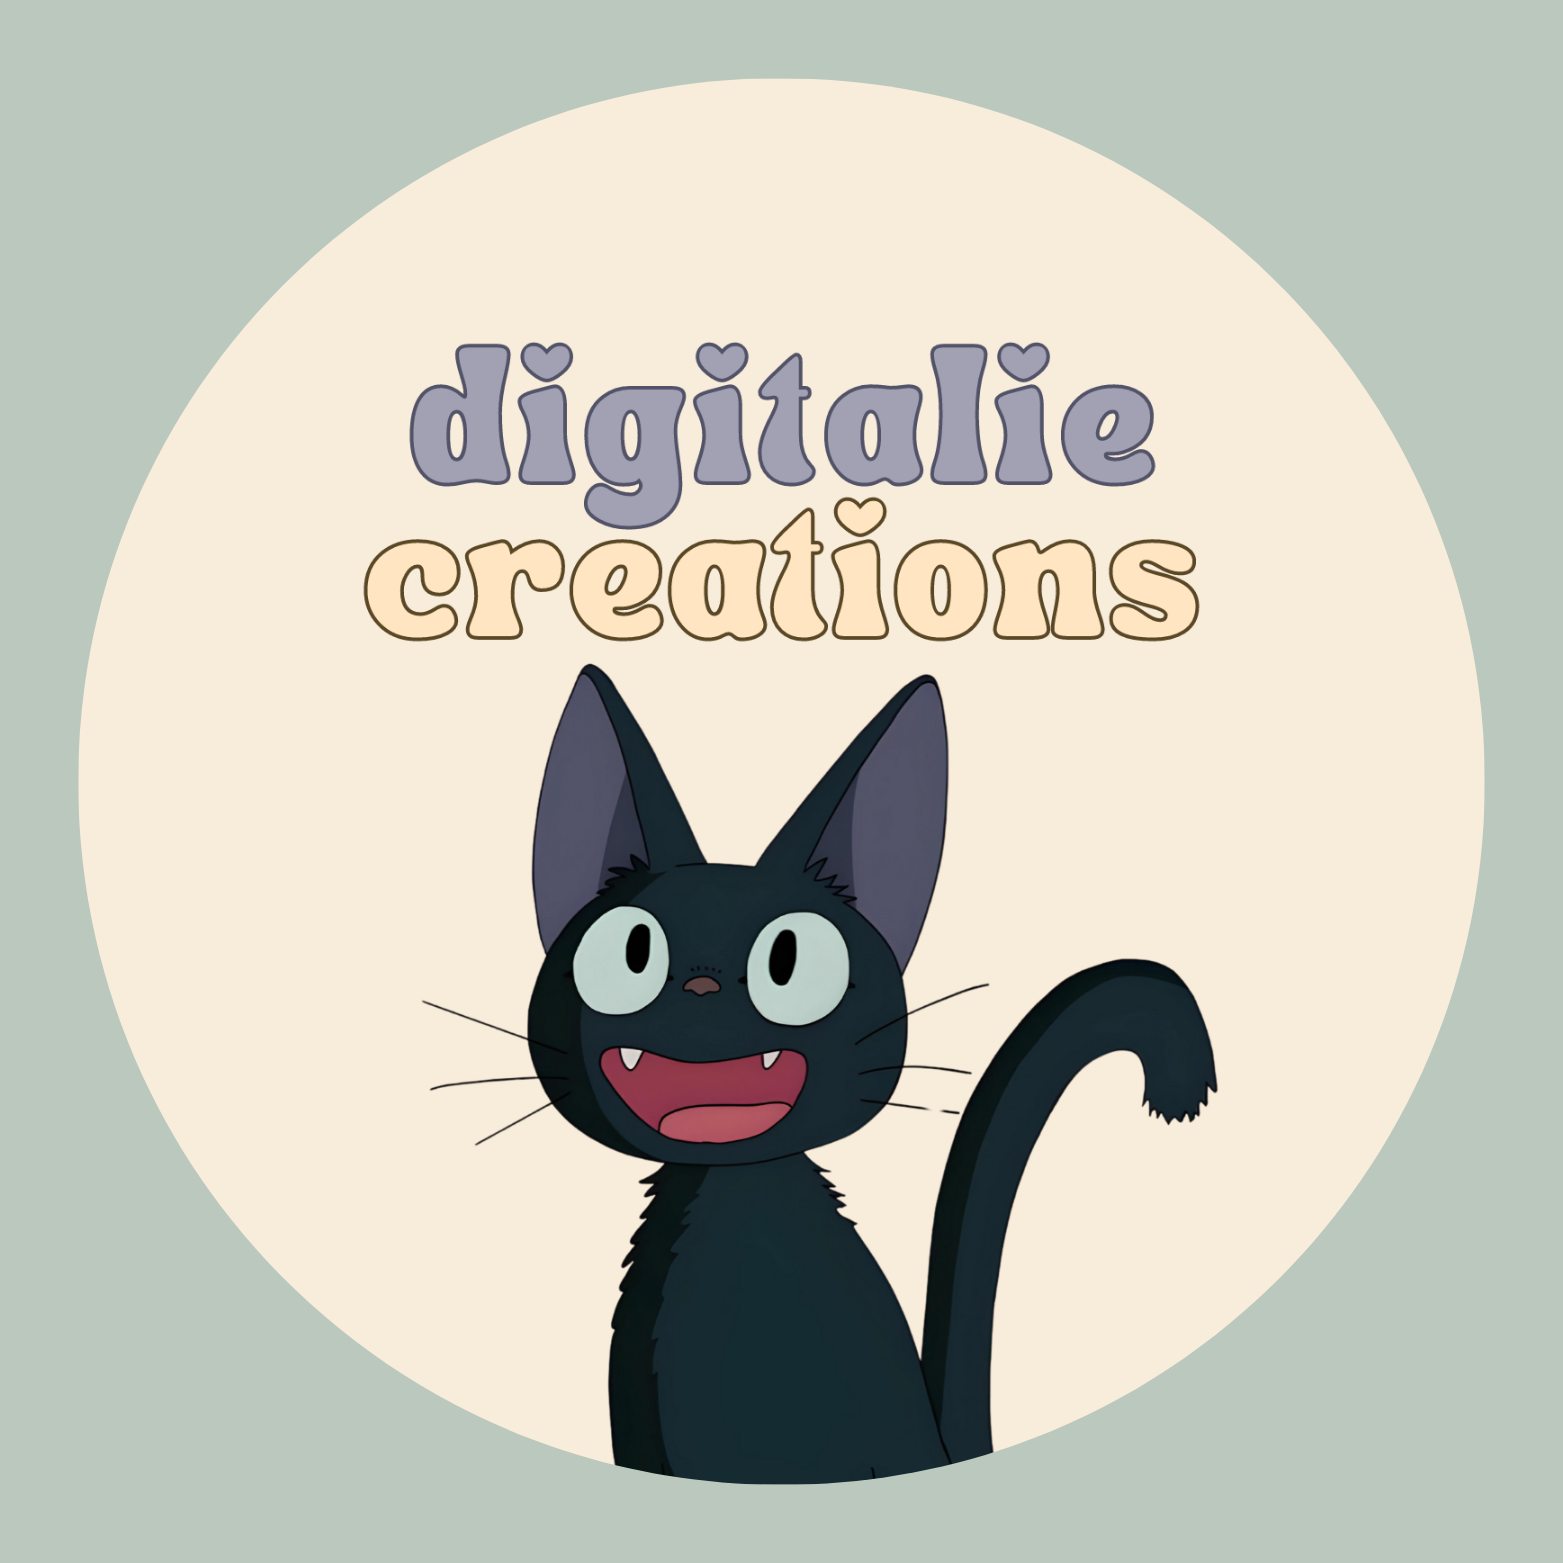 Digitalie Creations